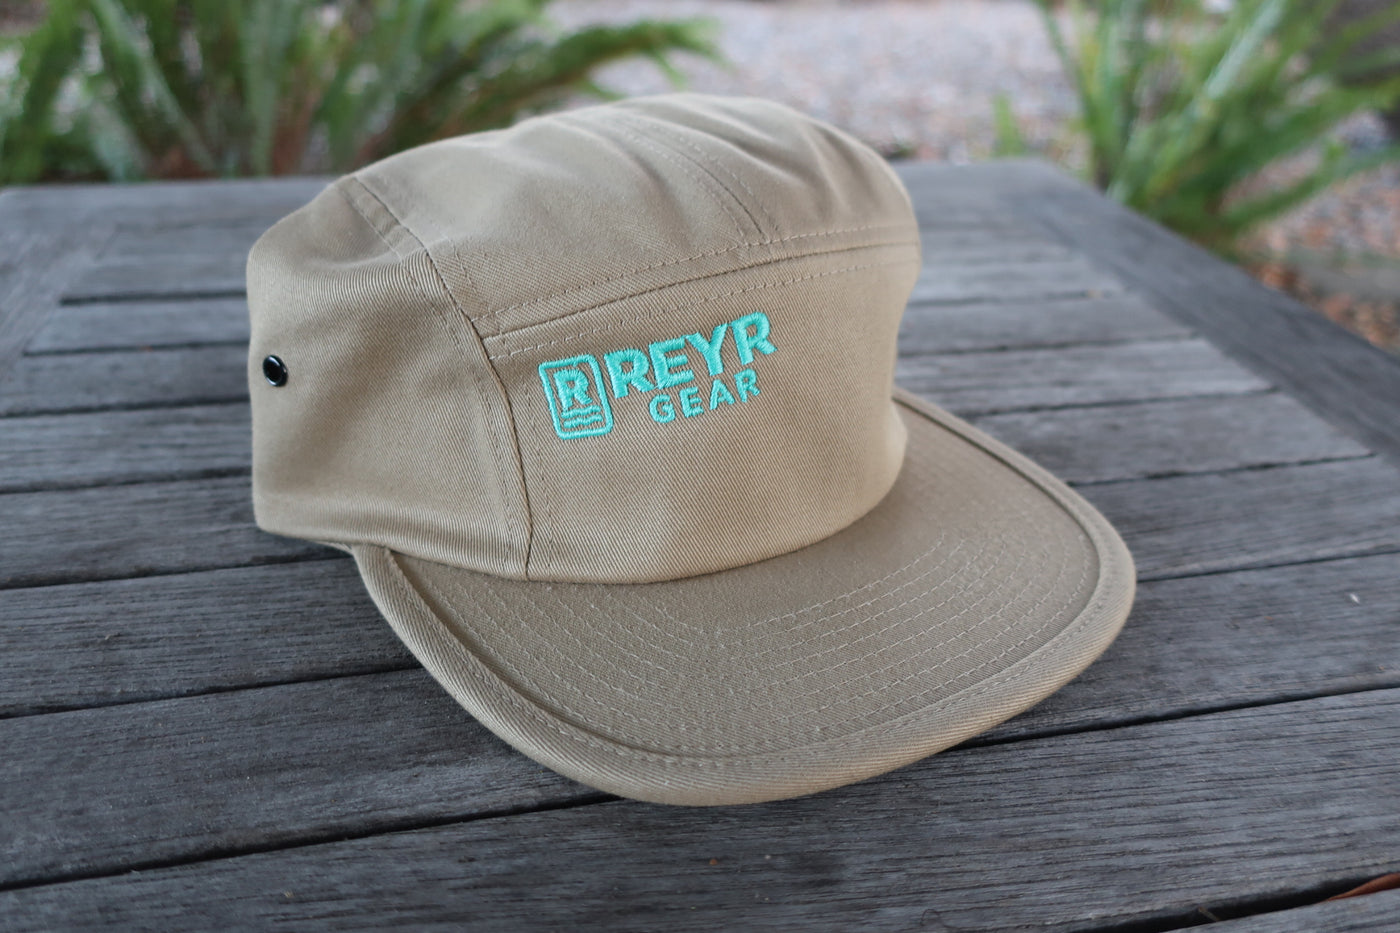 REYR Gear 5-Panel Camp Hat